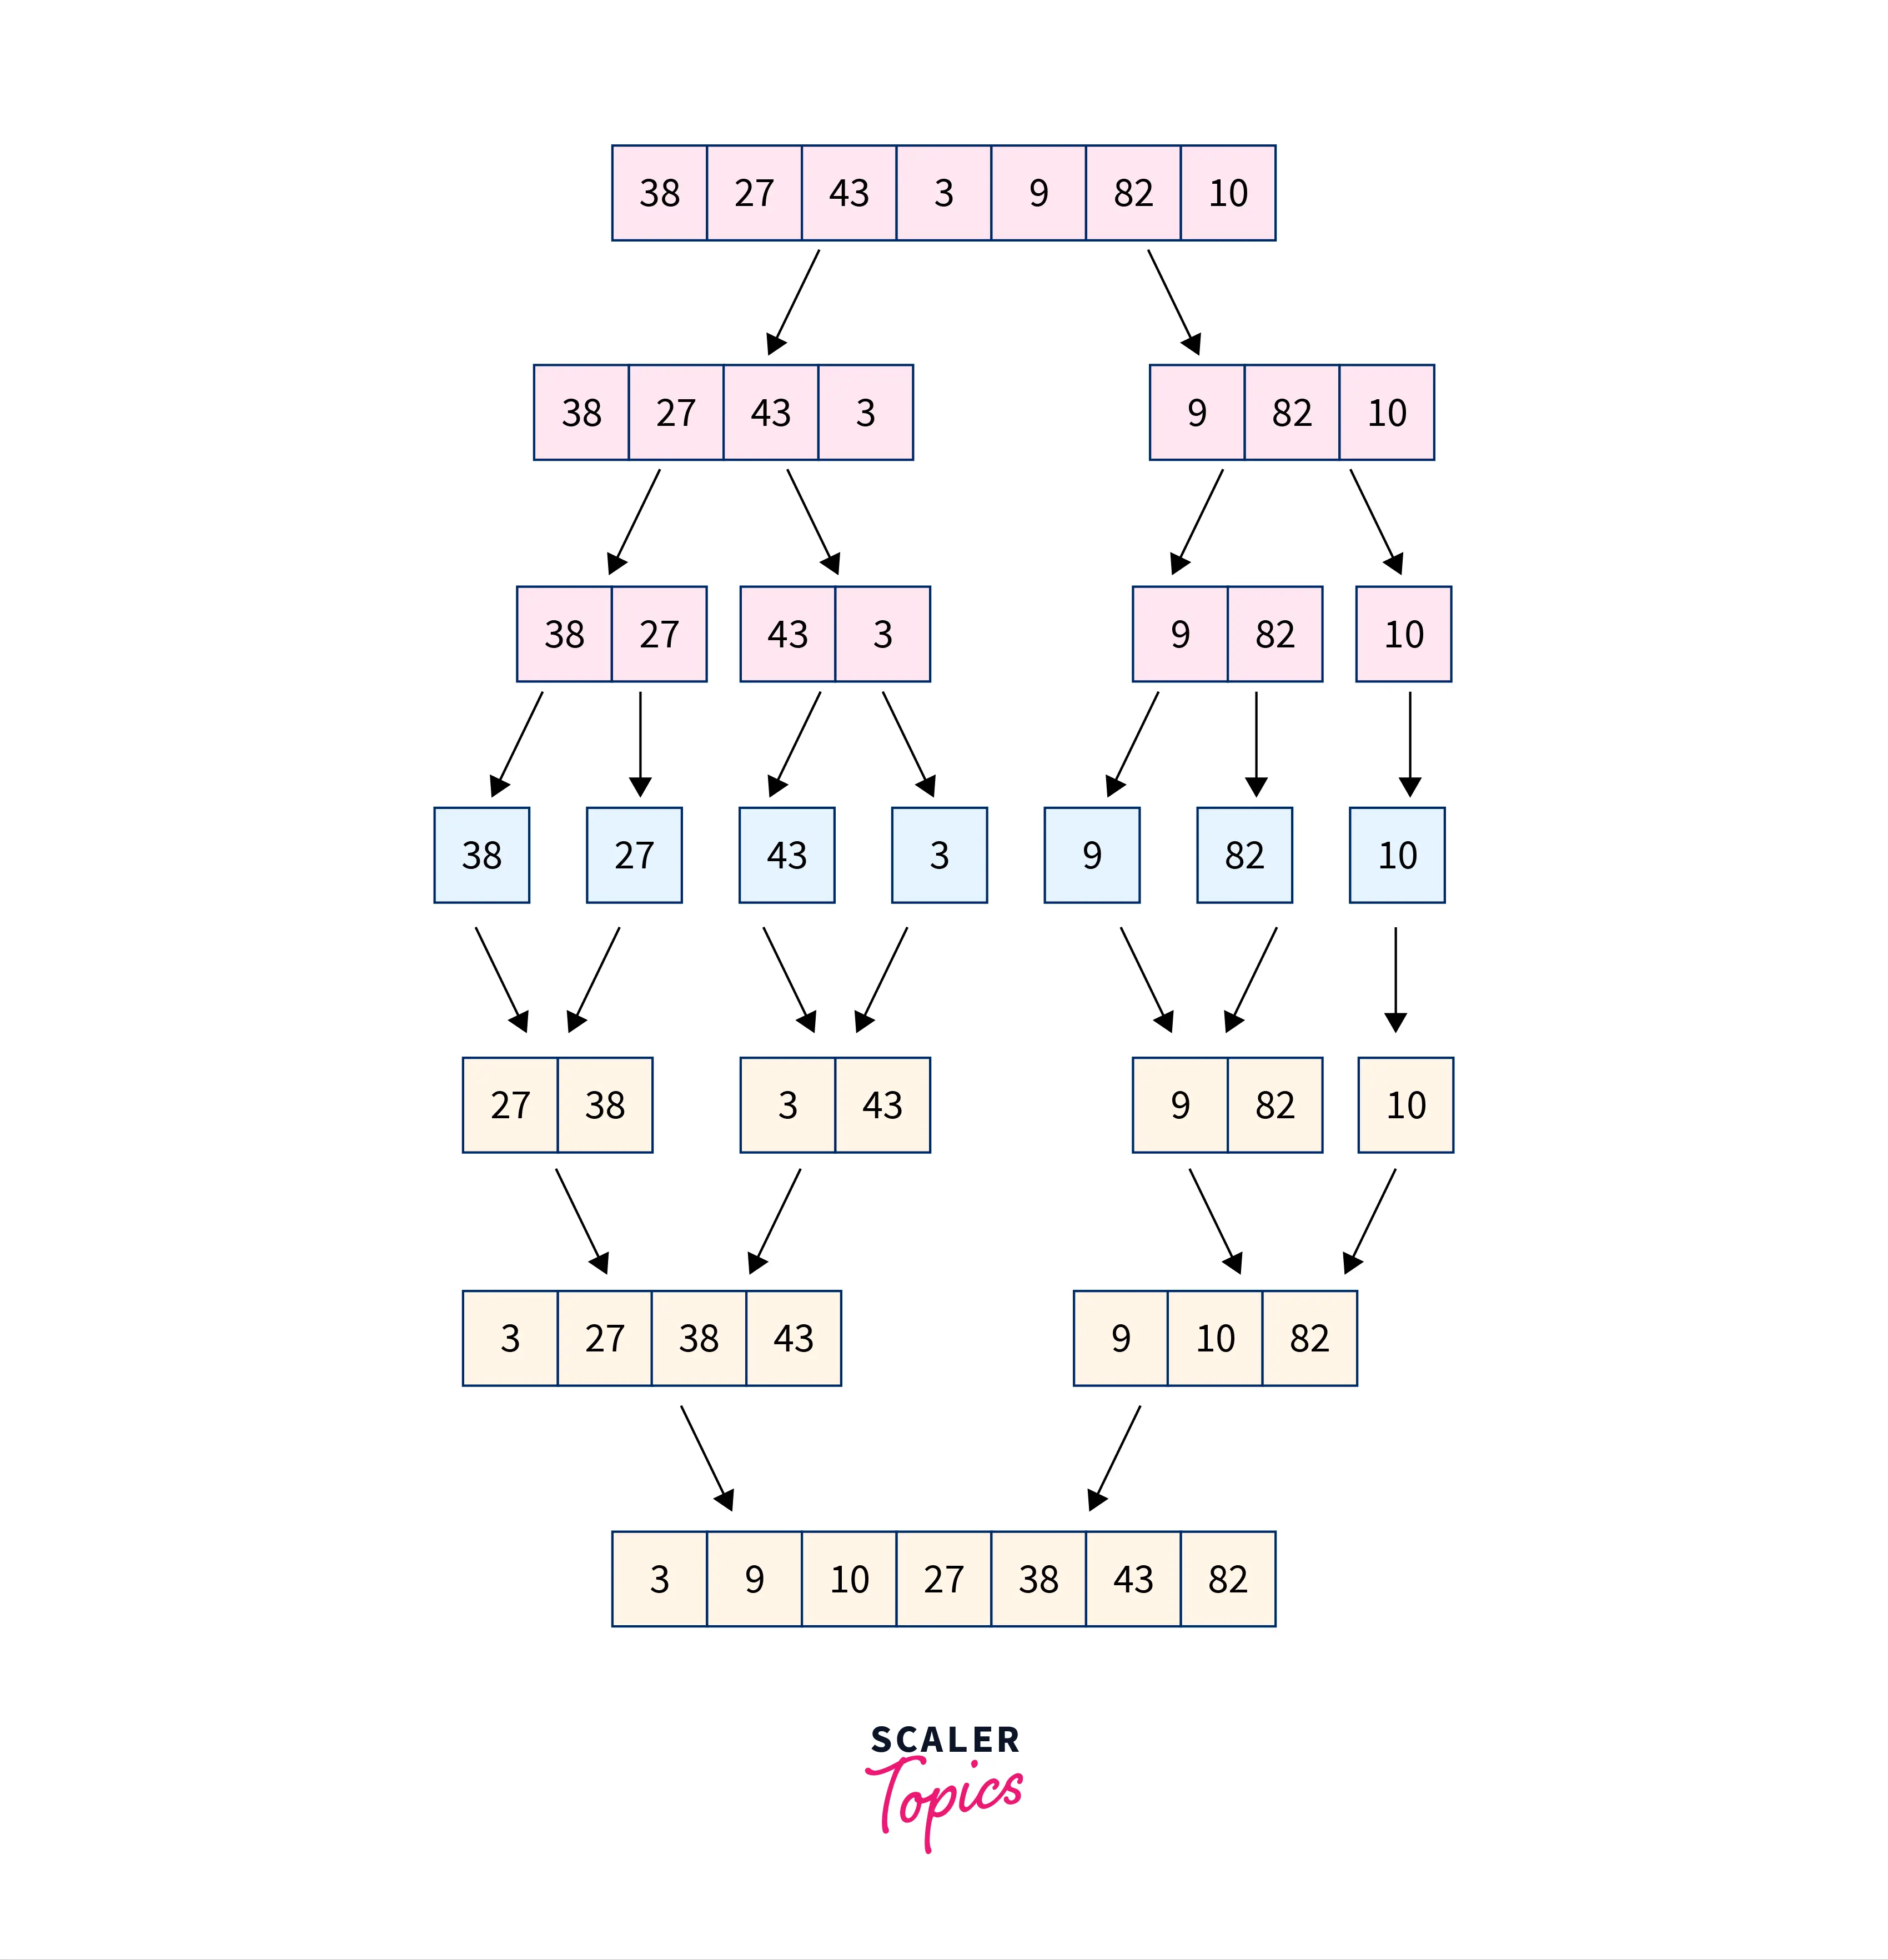 merge-k-sorted-arrays-efficient-approach